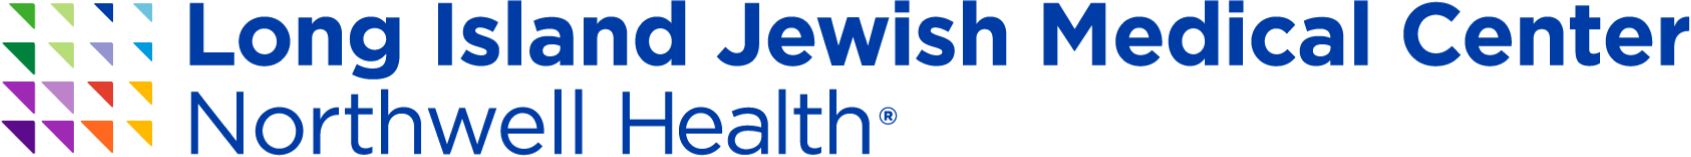 Long Island Jewish Medical Center logo